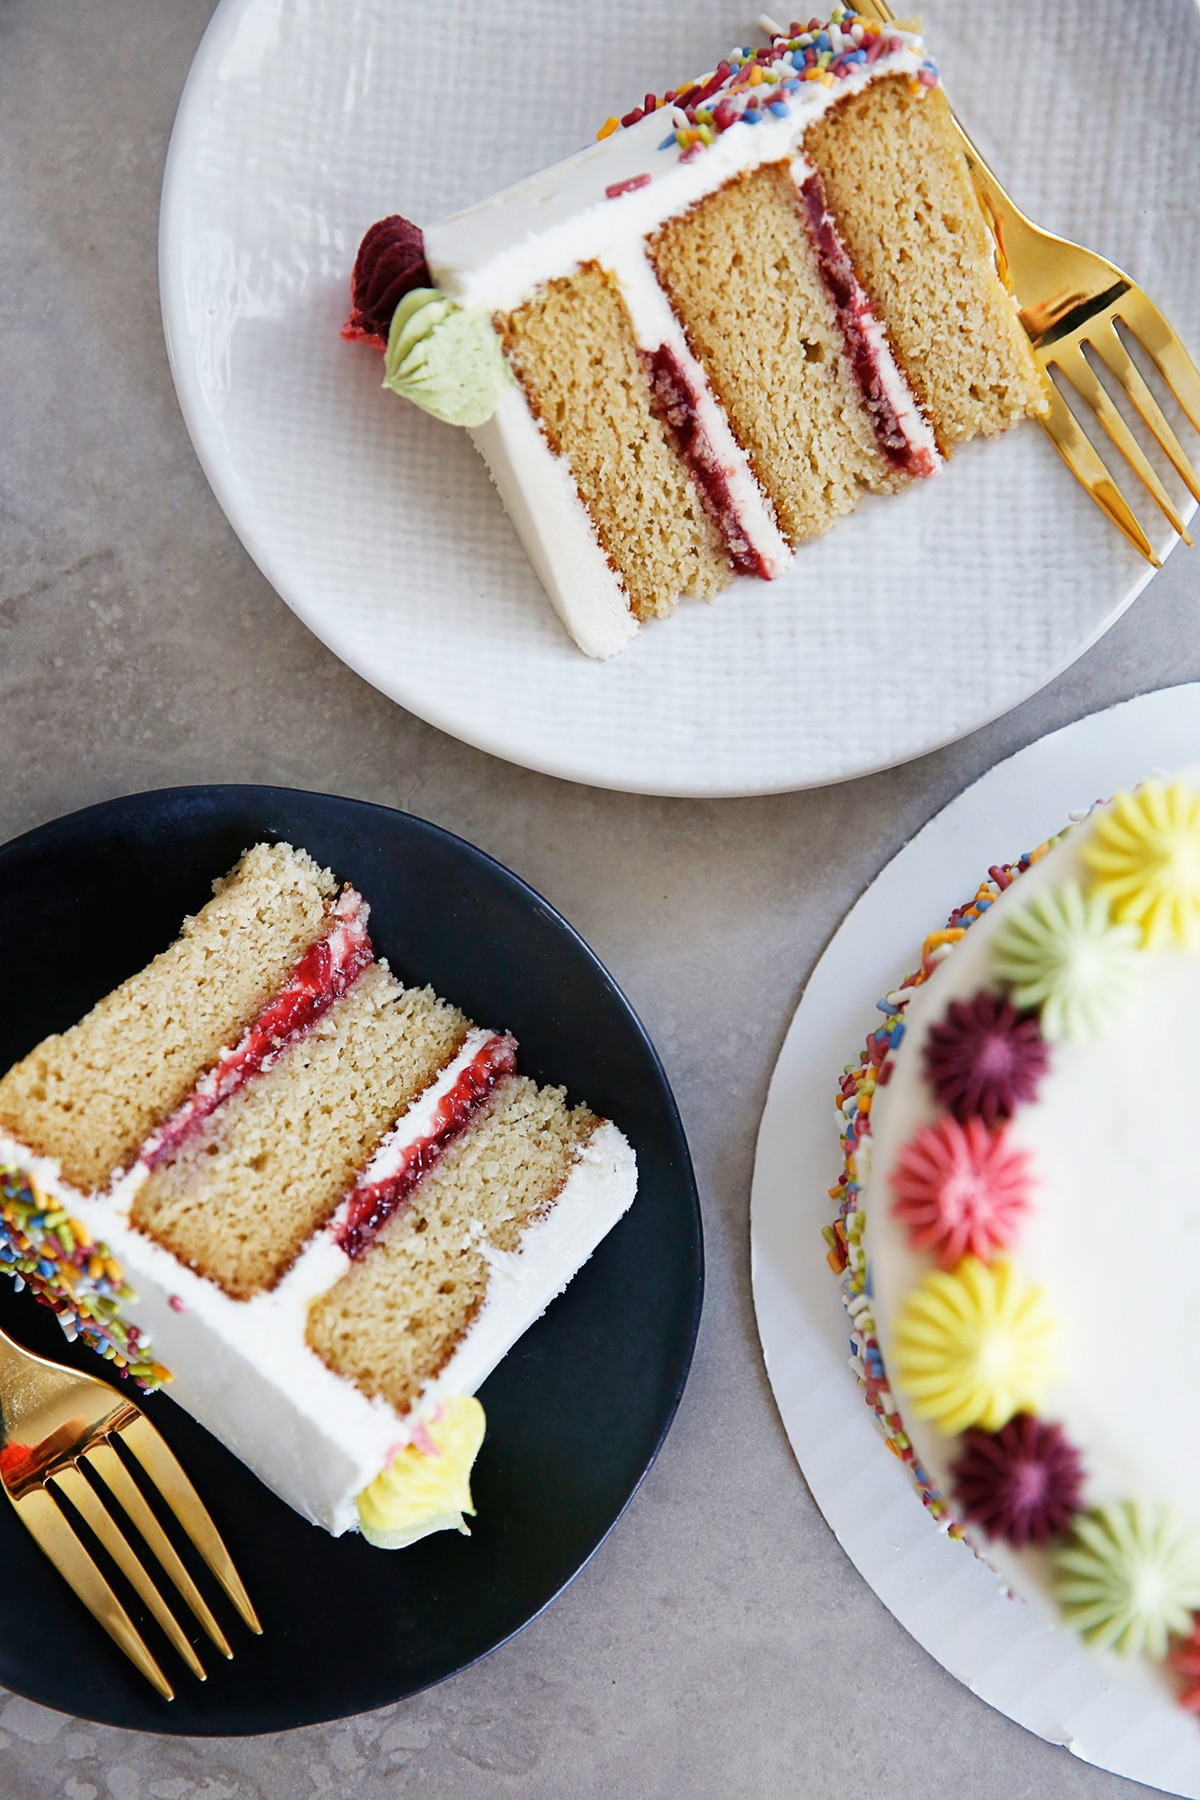 Best ideas about Gluten Free Birthday Cake
. Save or Pin The BEST Gluten Free Layer Birthday Cake Lexi s Clean Now.